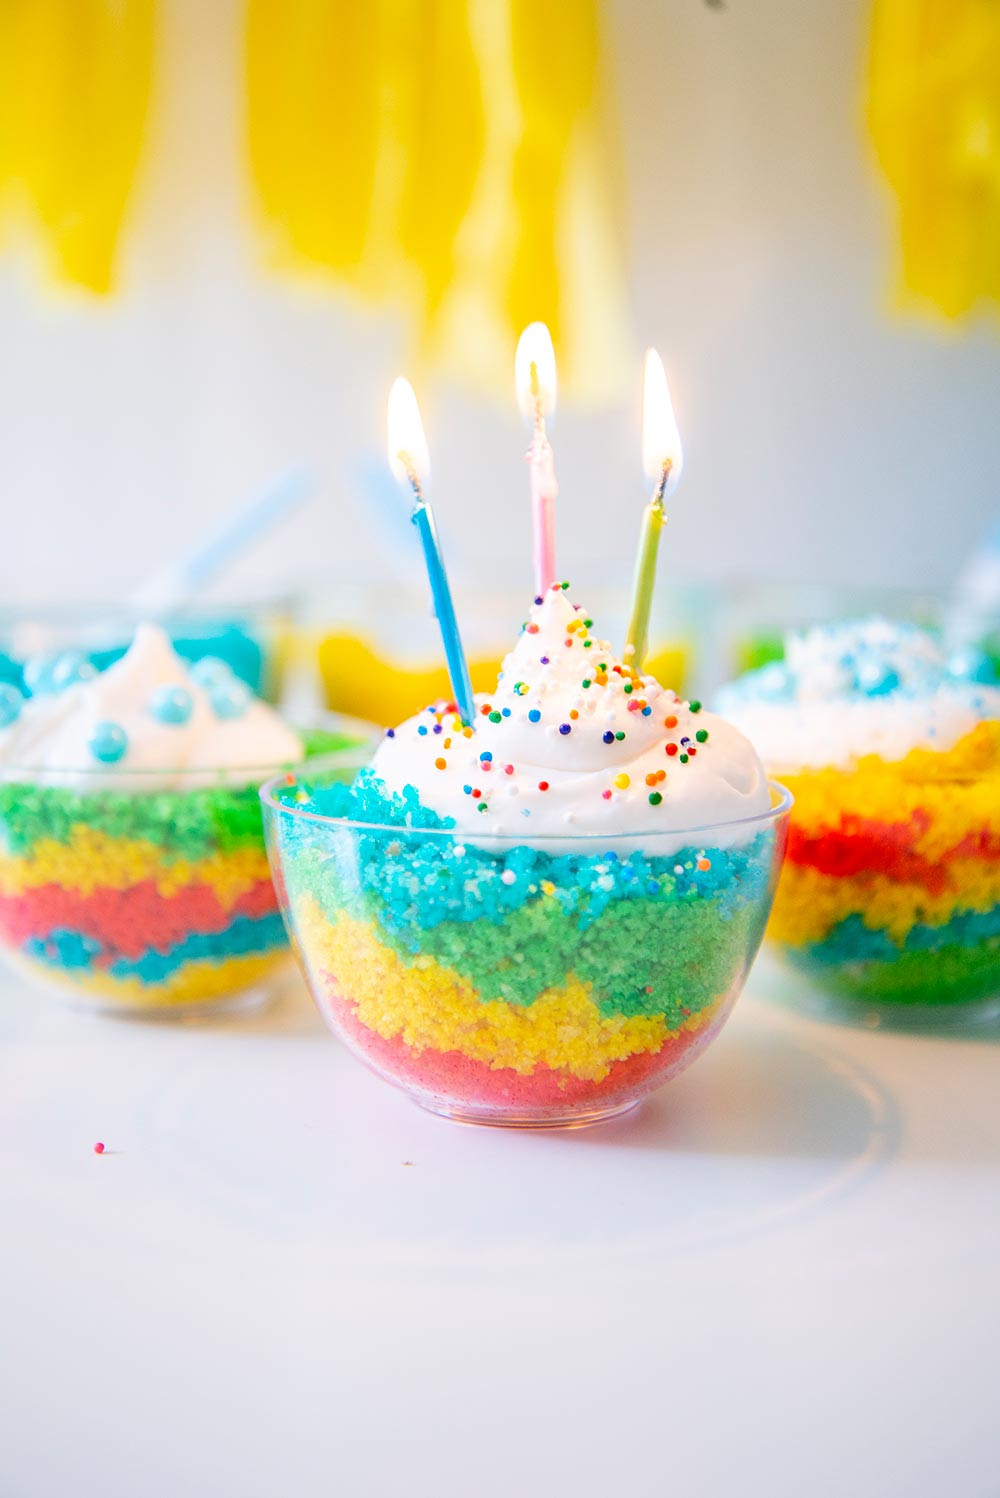 DIY Kids Birthday Cakes
 Buy or DIY Rainbow Birthday Cake for Kids INSPIRATION BLOG